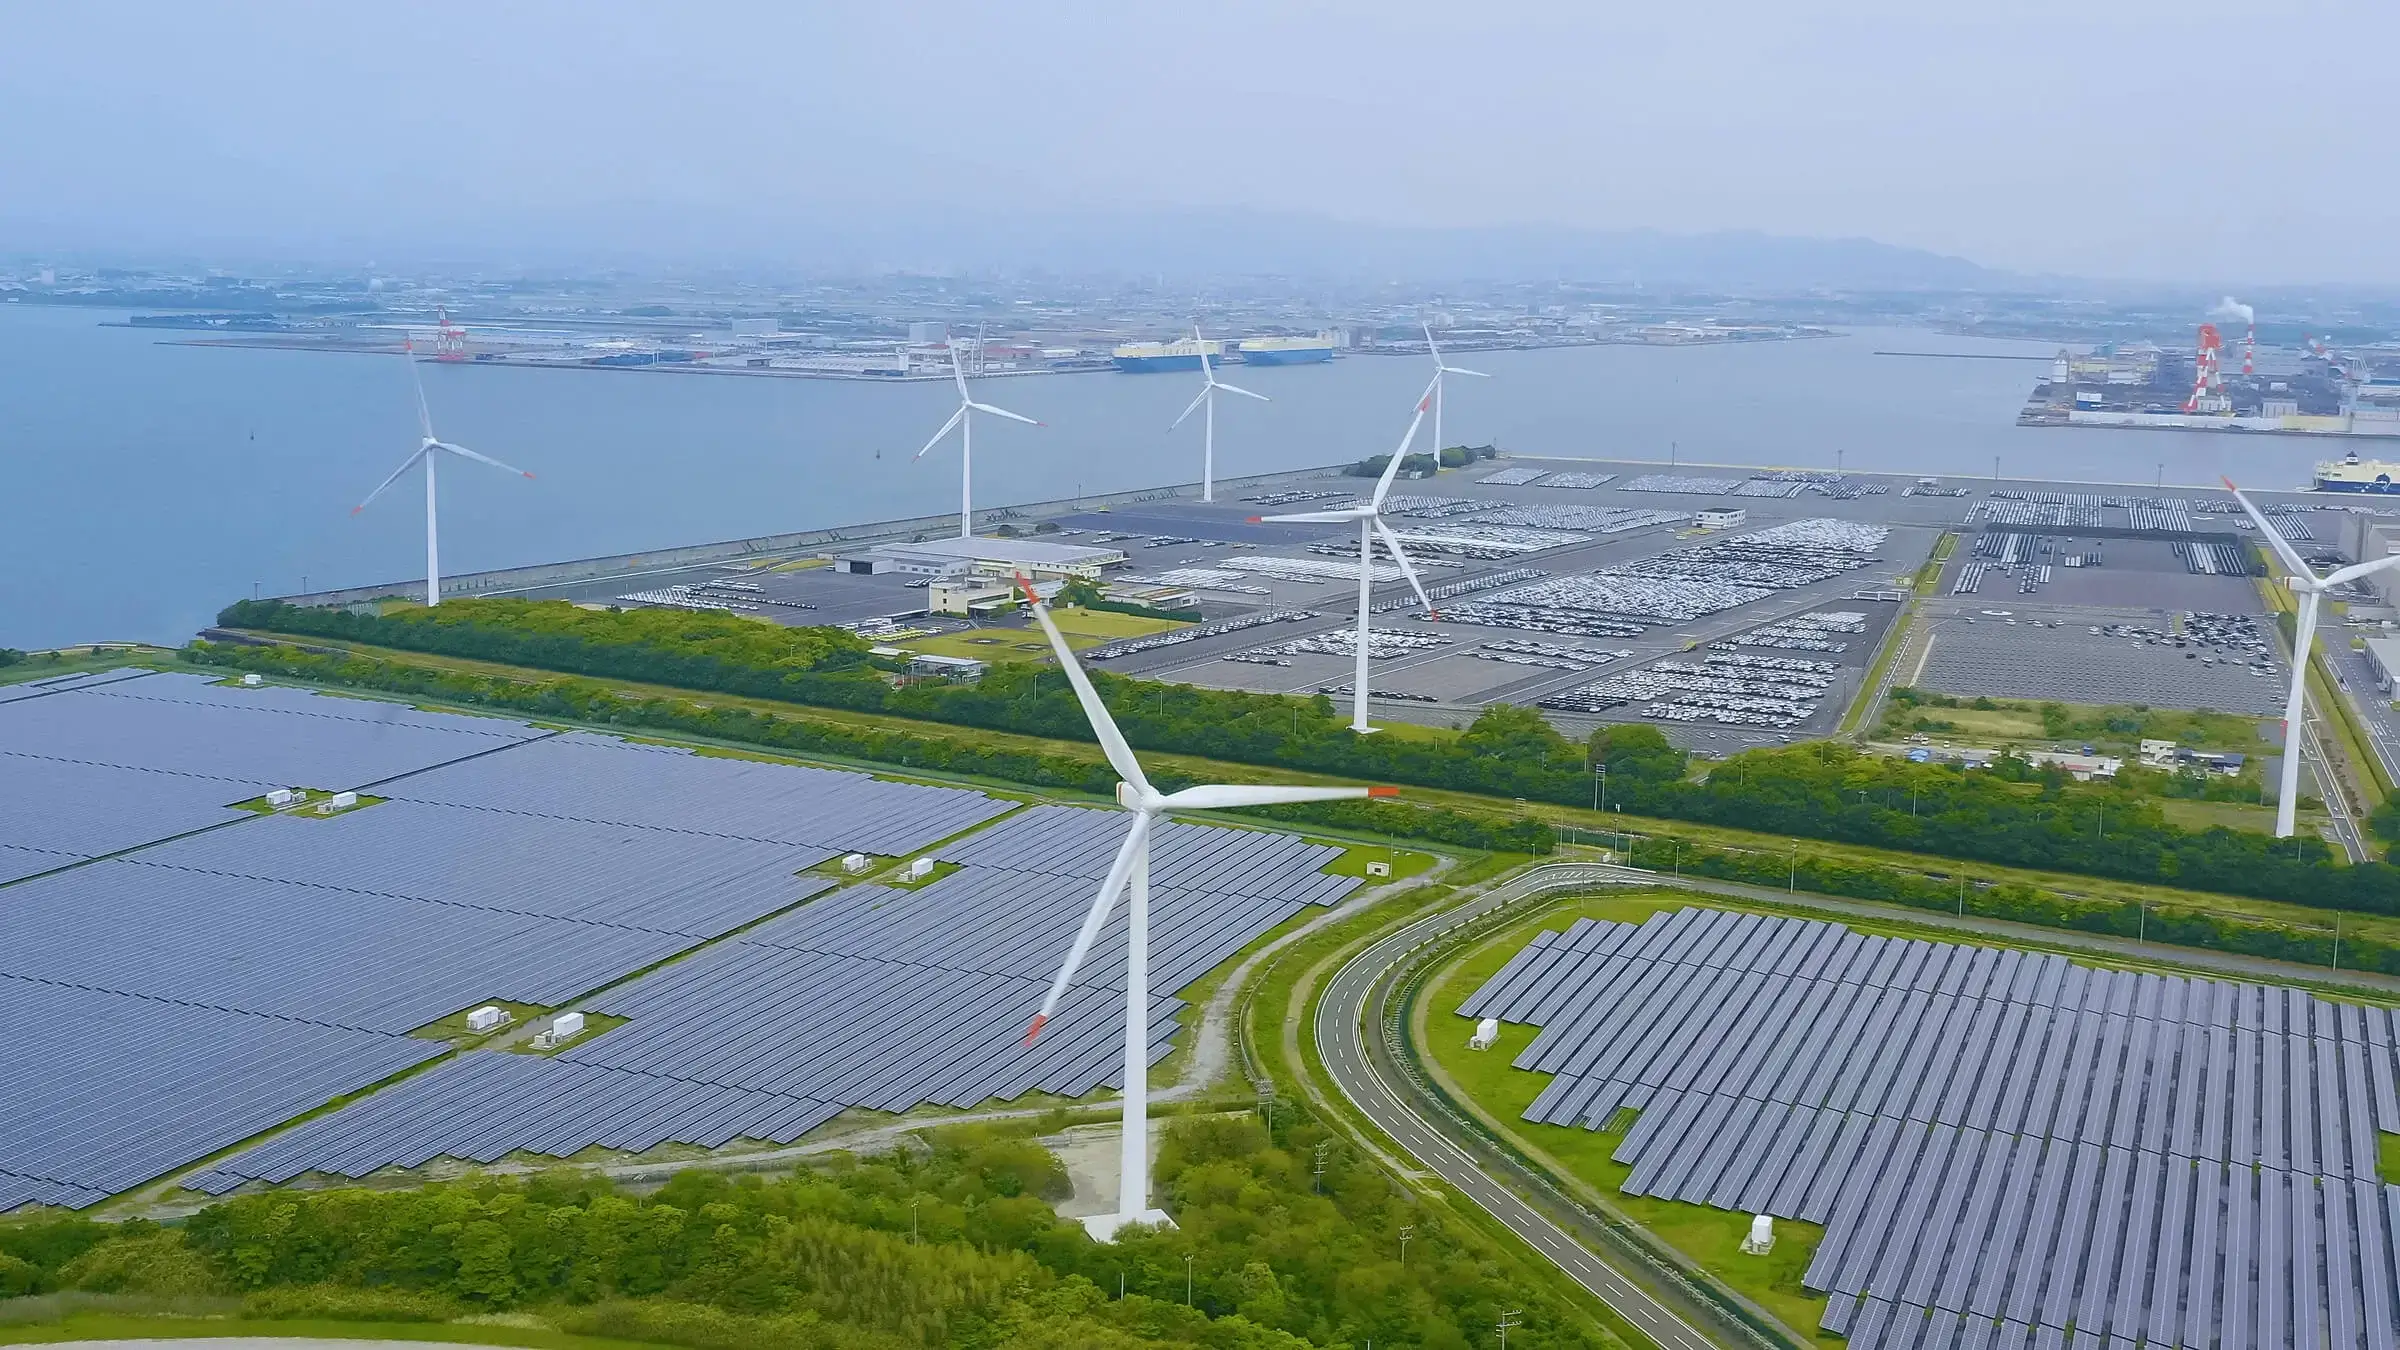 A large scale solar and wind farm near a port